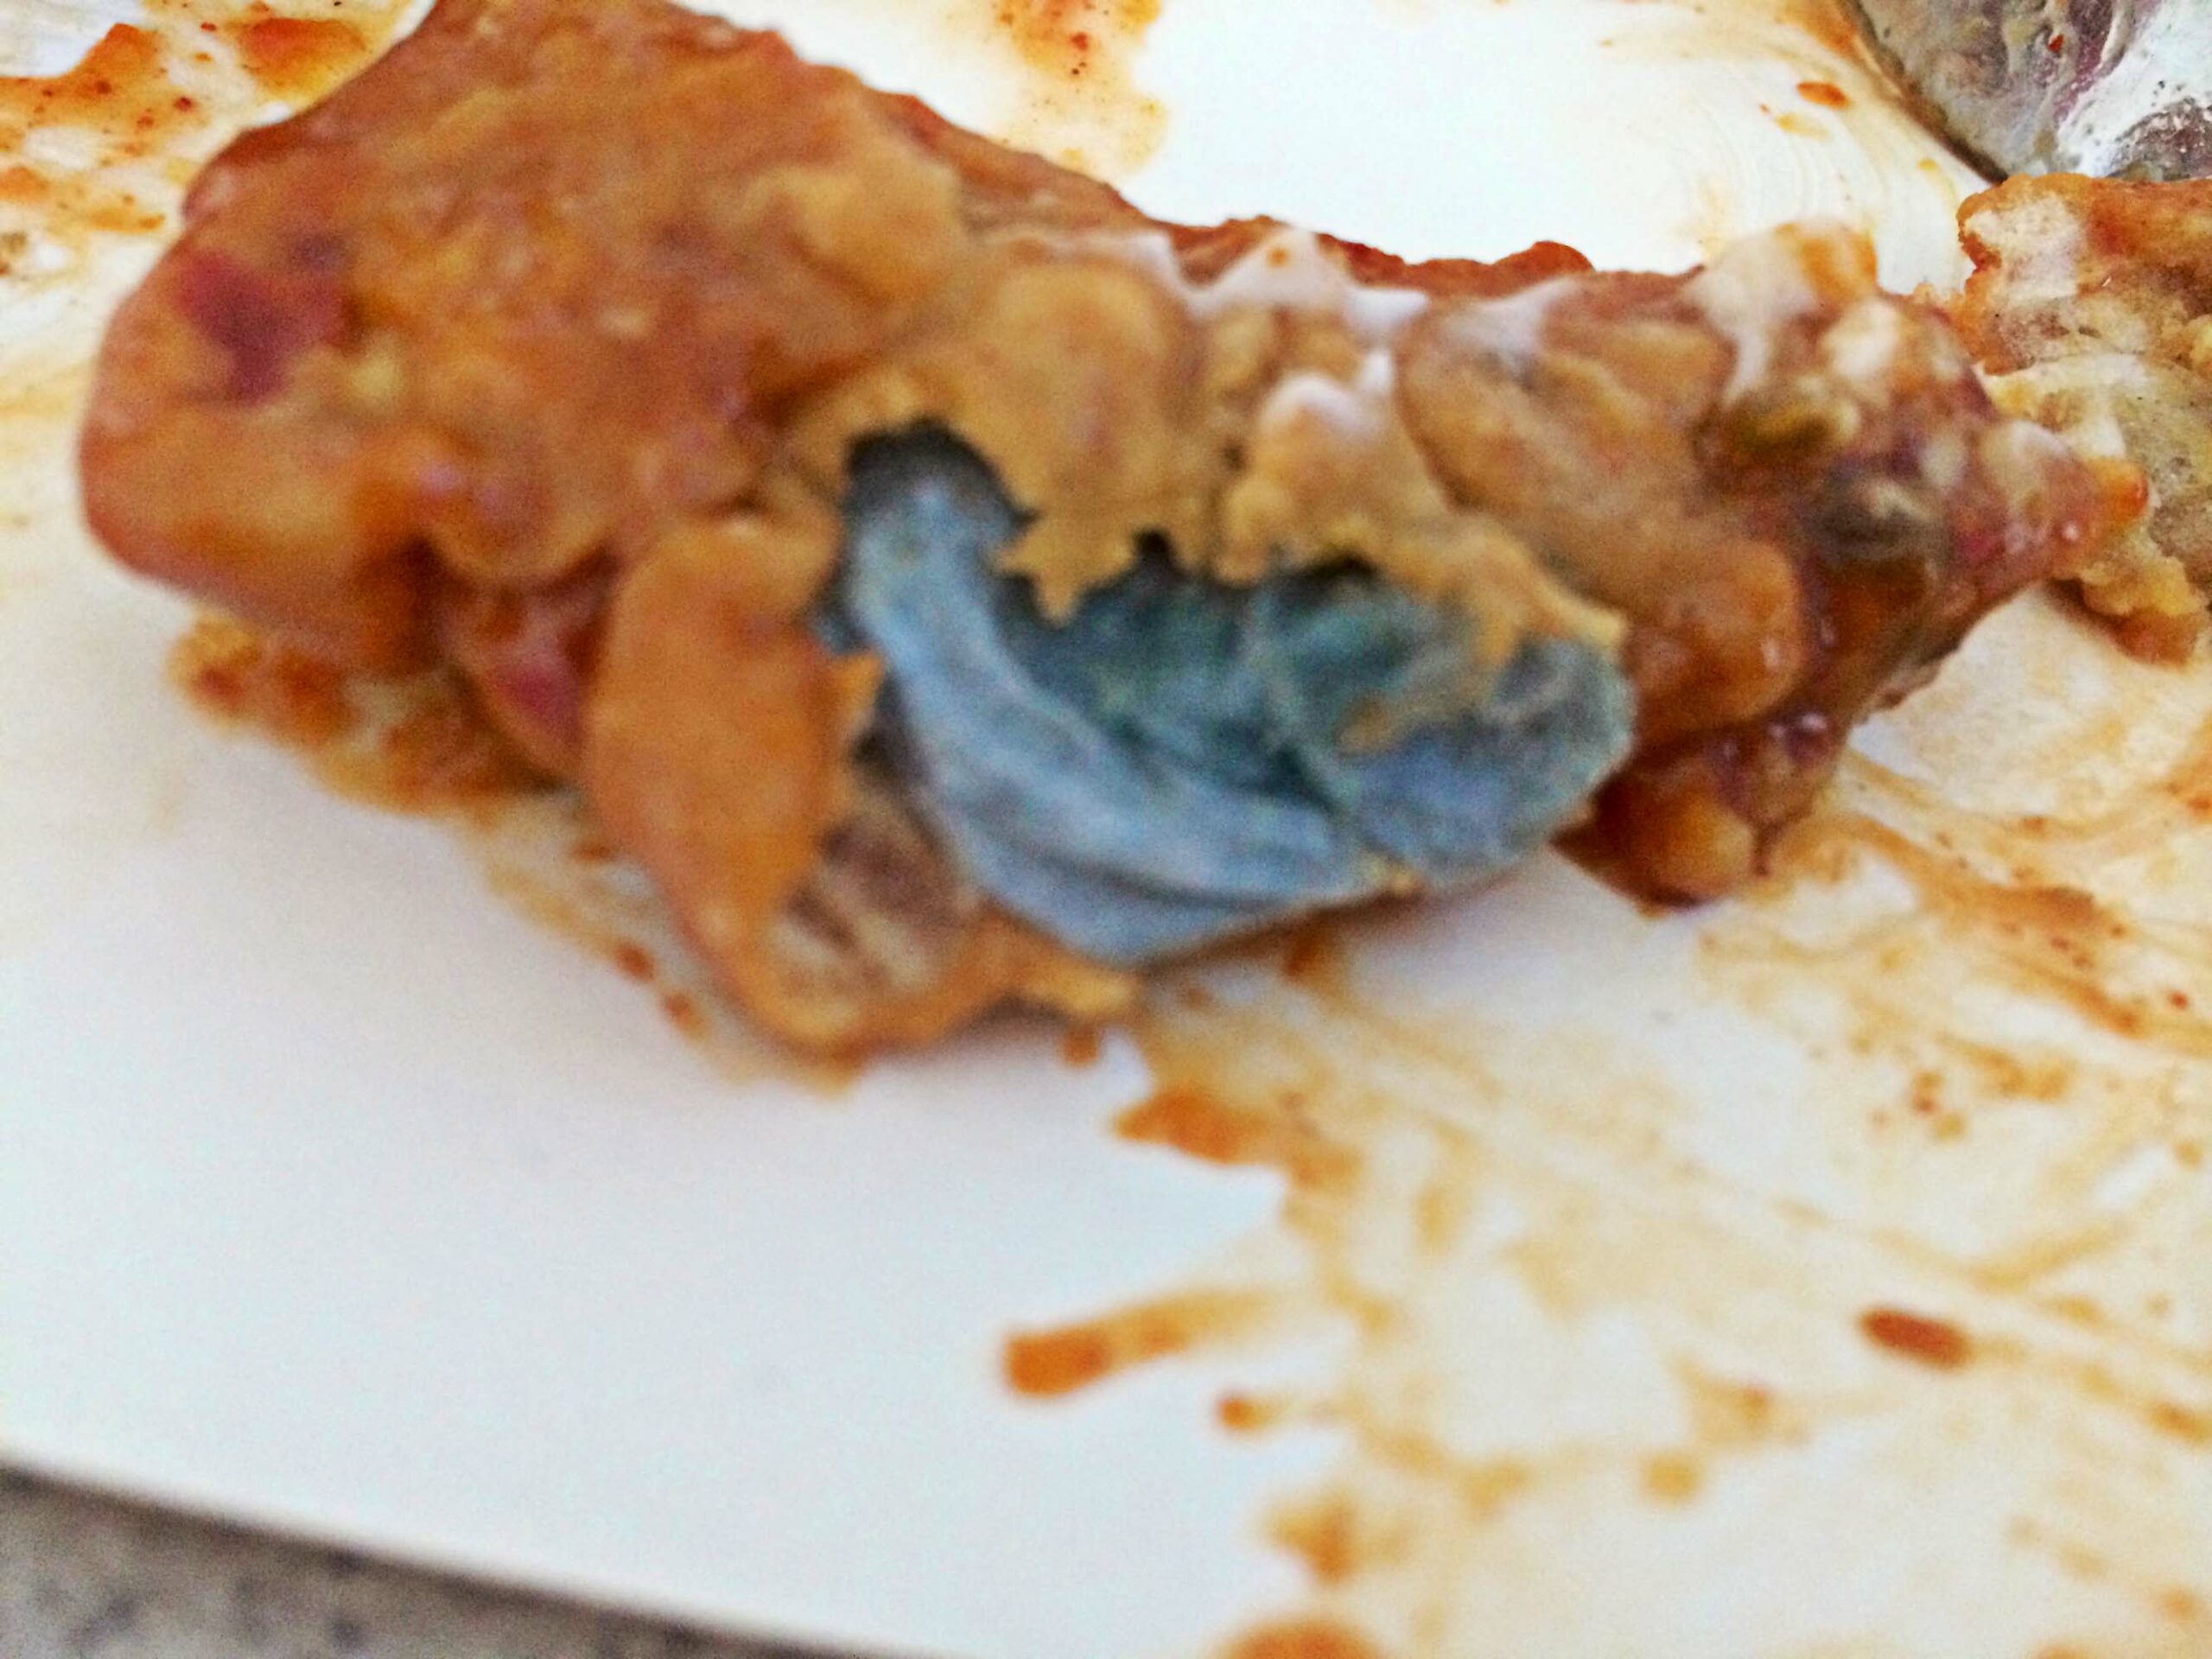 A Deep-Fried Blue Paper Towel And Not Kfc Chicken